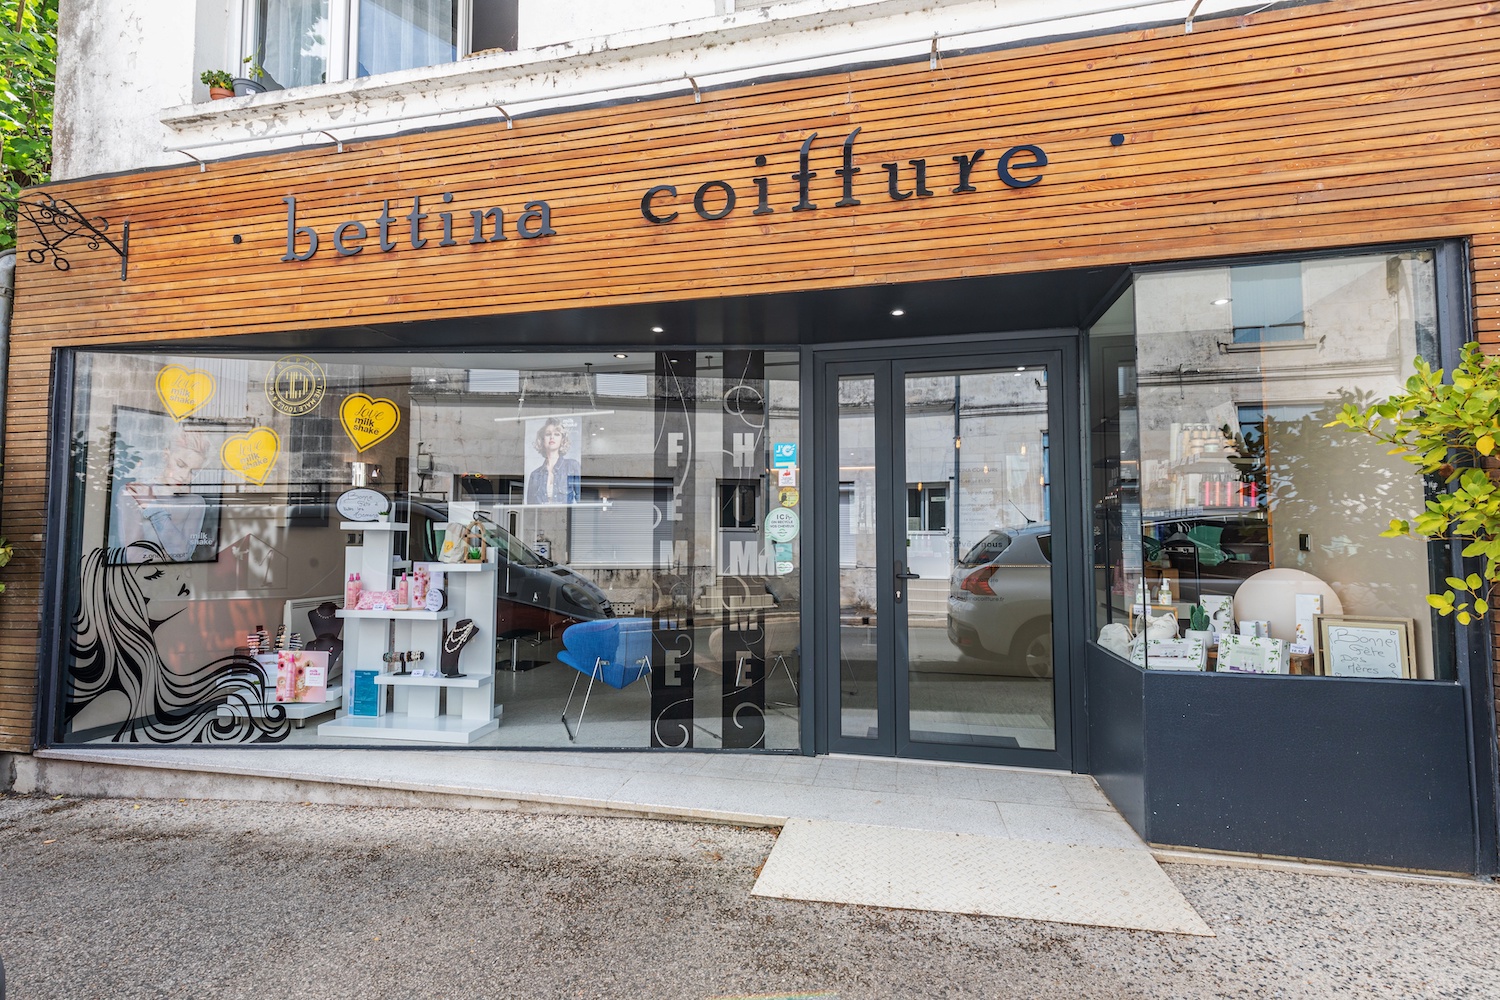 Salon de coiffure Port d'Envaux - Bettina Coiffure